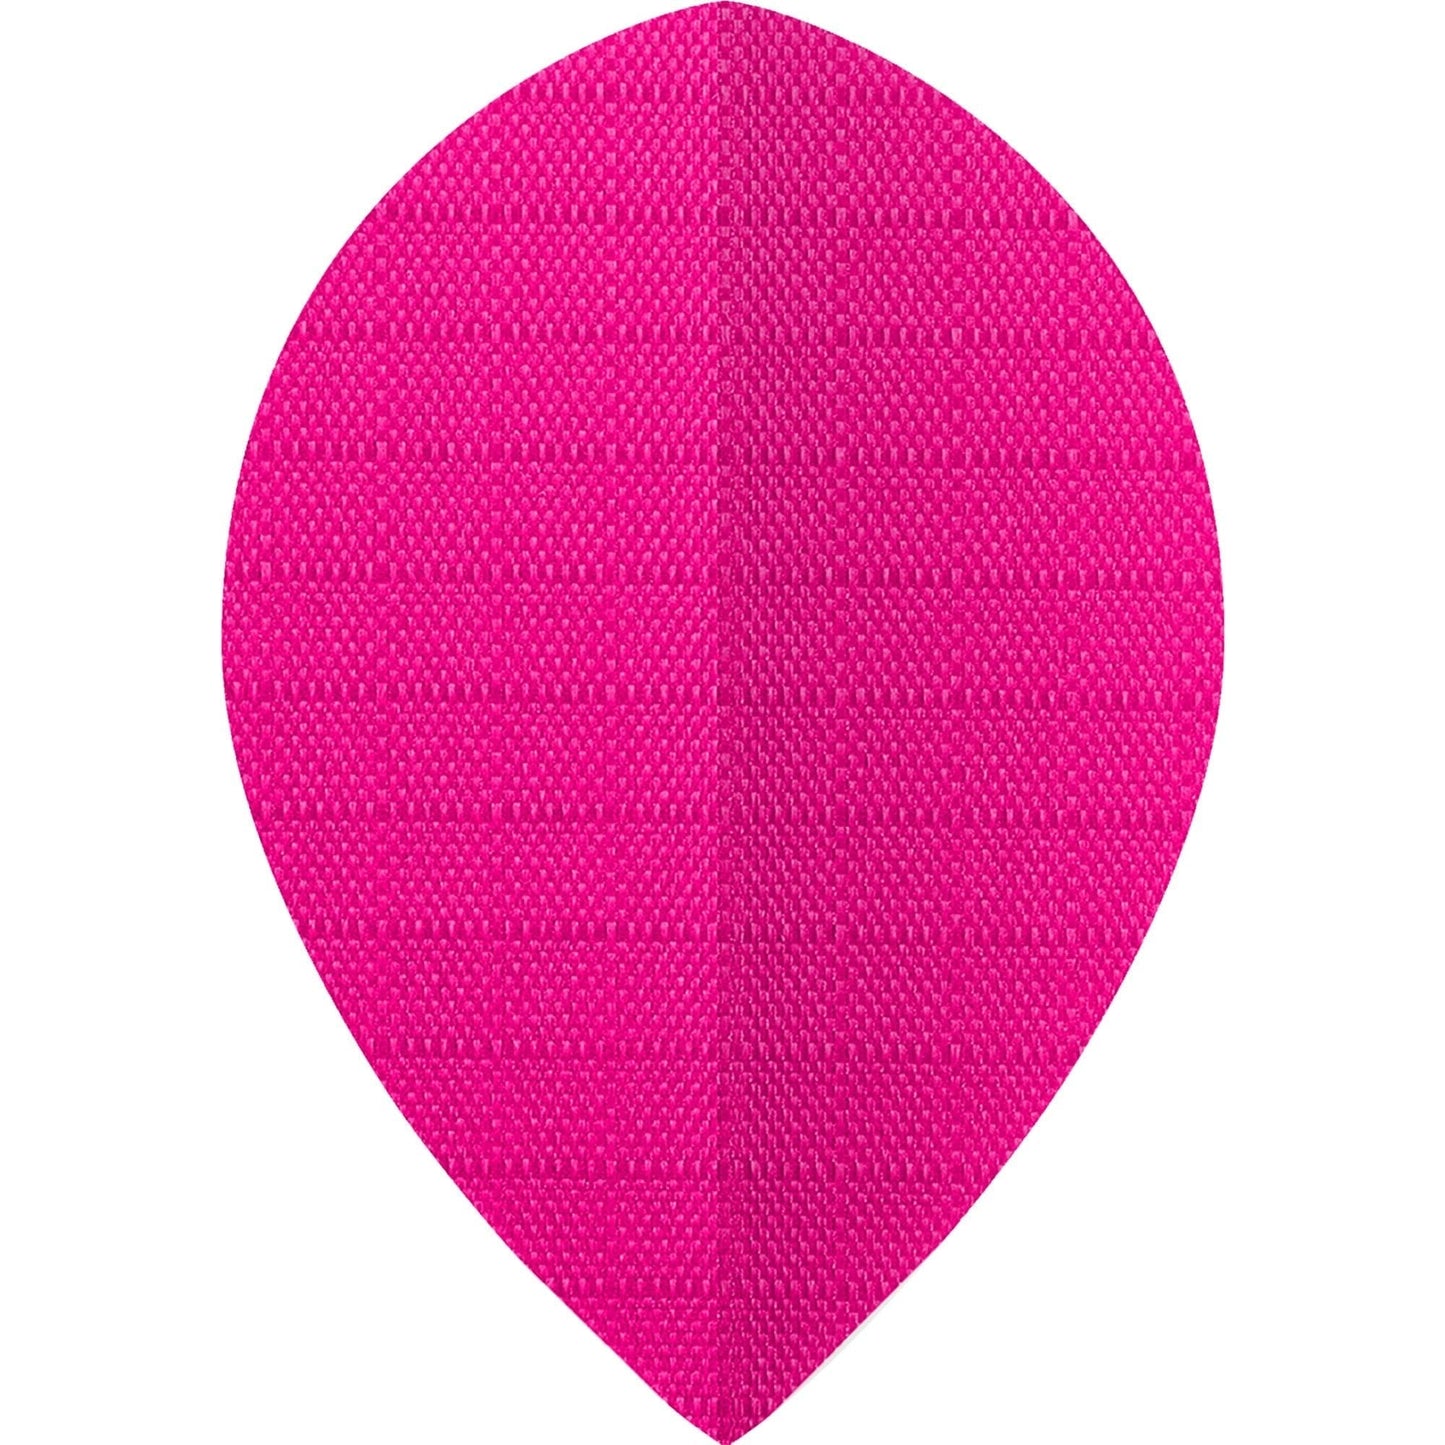 *Designa Dart Flights - Fabric Rip Stop Nylon - Longlife - Pear Fluro Pink